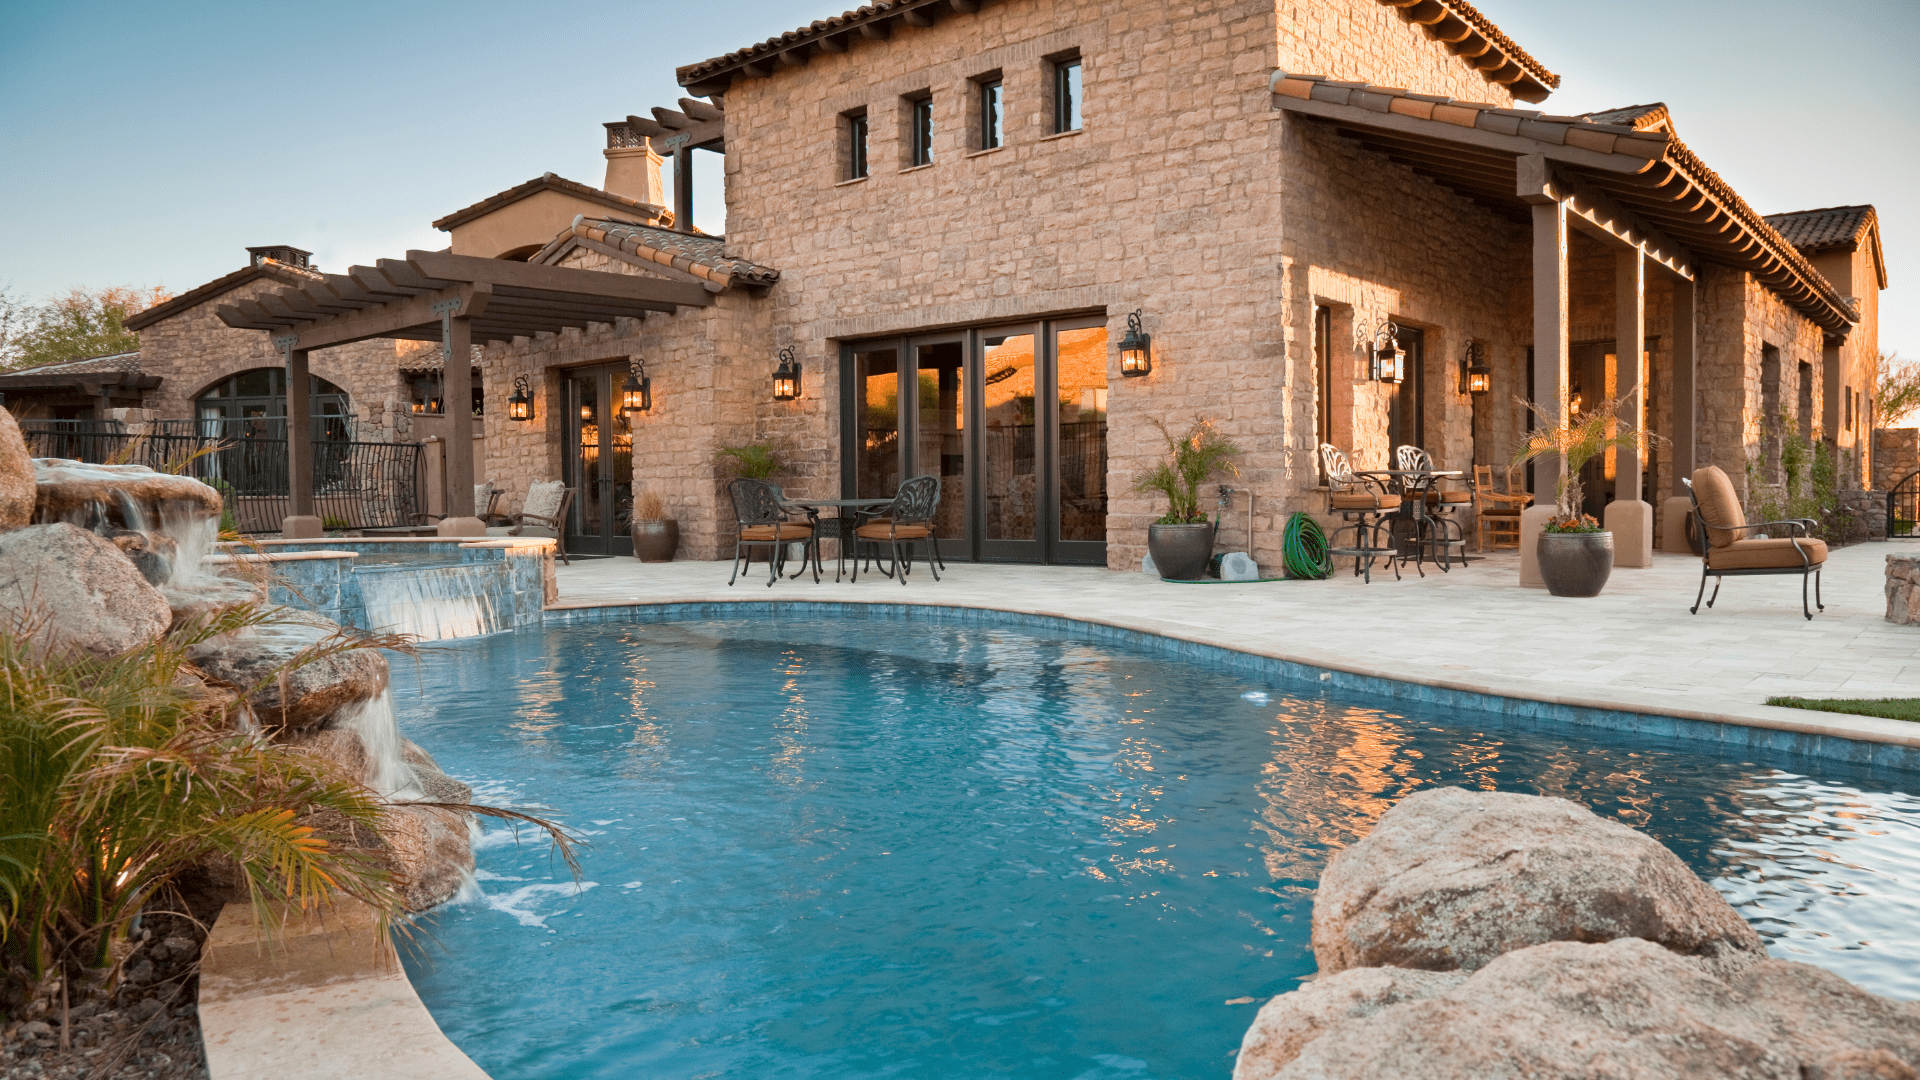 Pool of Luxury Home